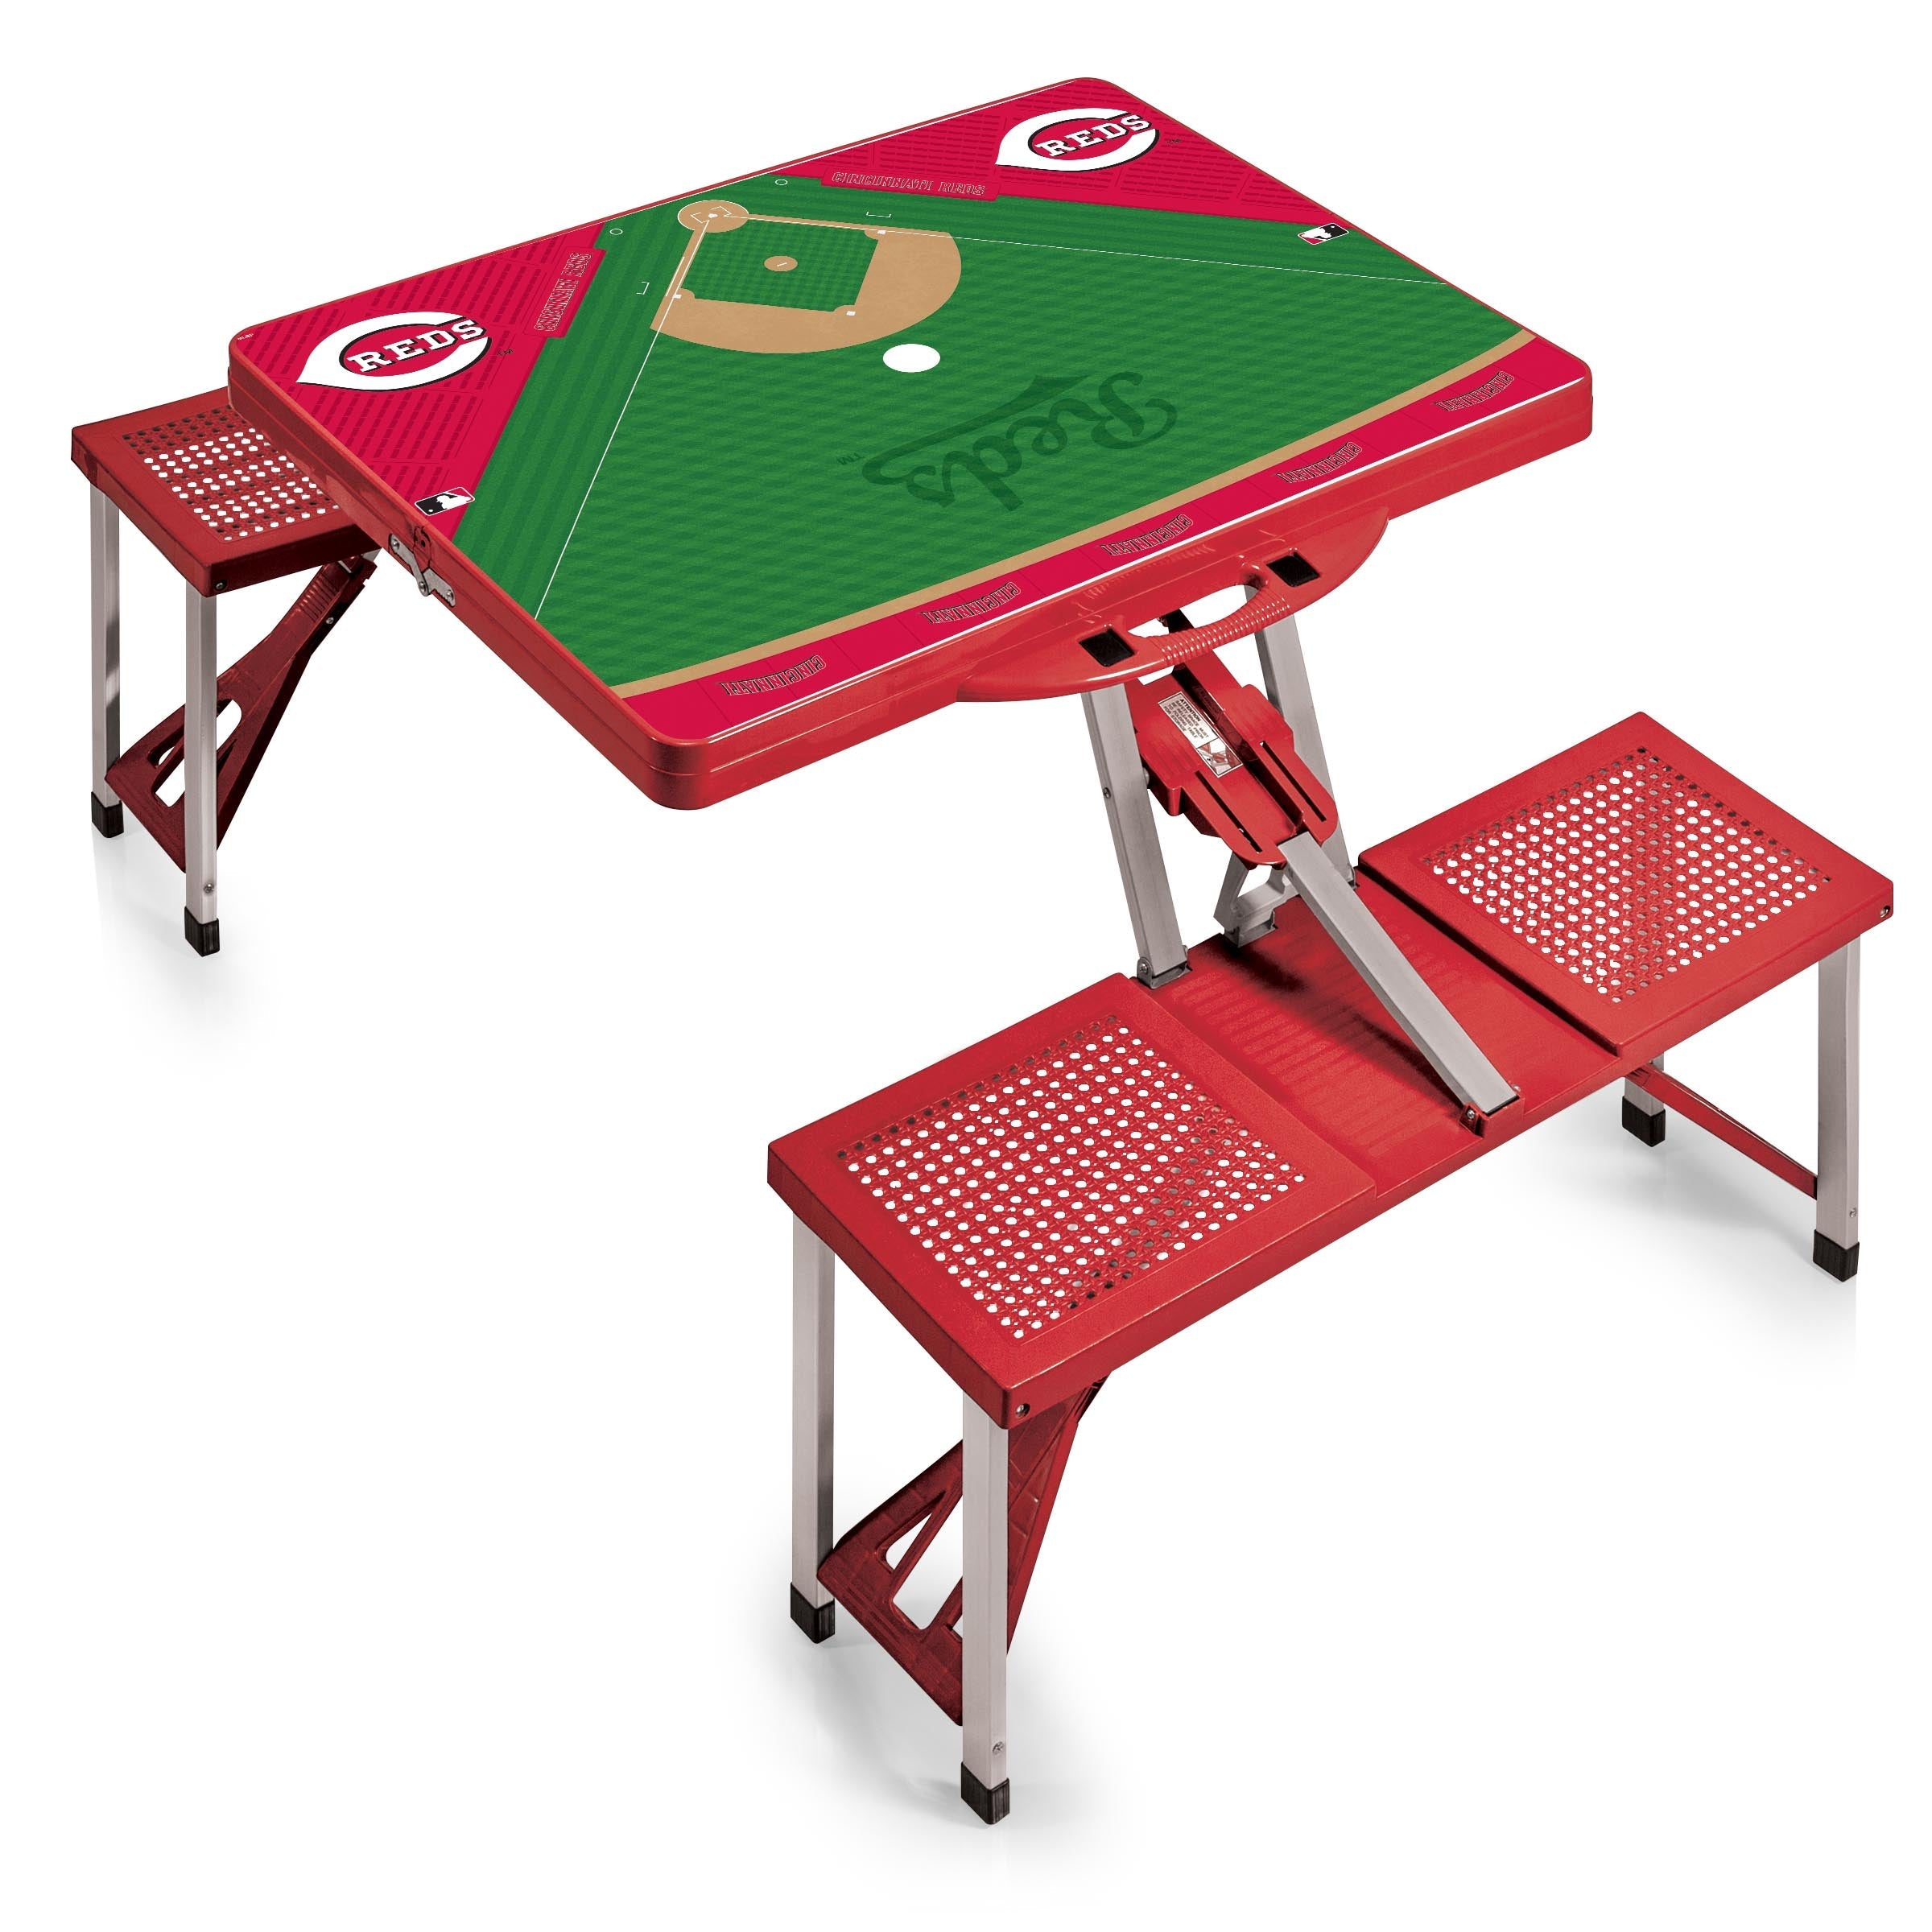 Baseball Diamond - Cincinnati Reds - Picnic Table Portable Folding Table with Seats